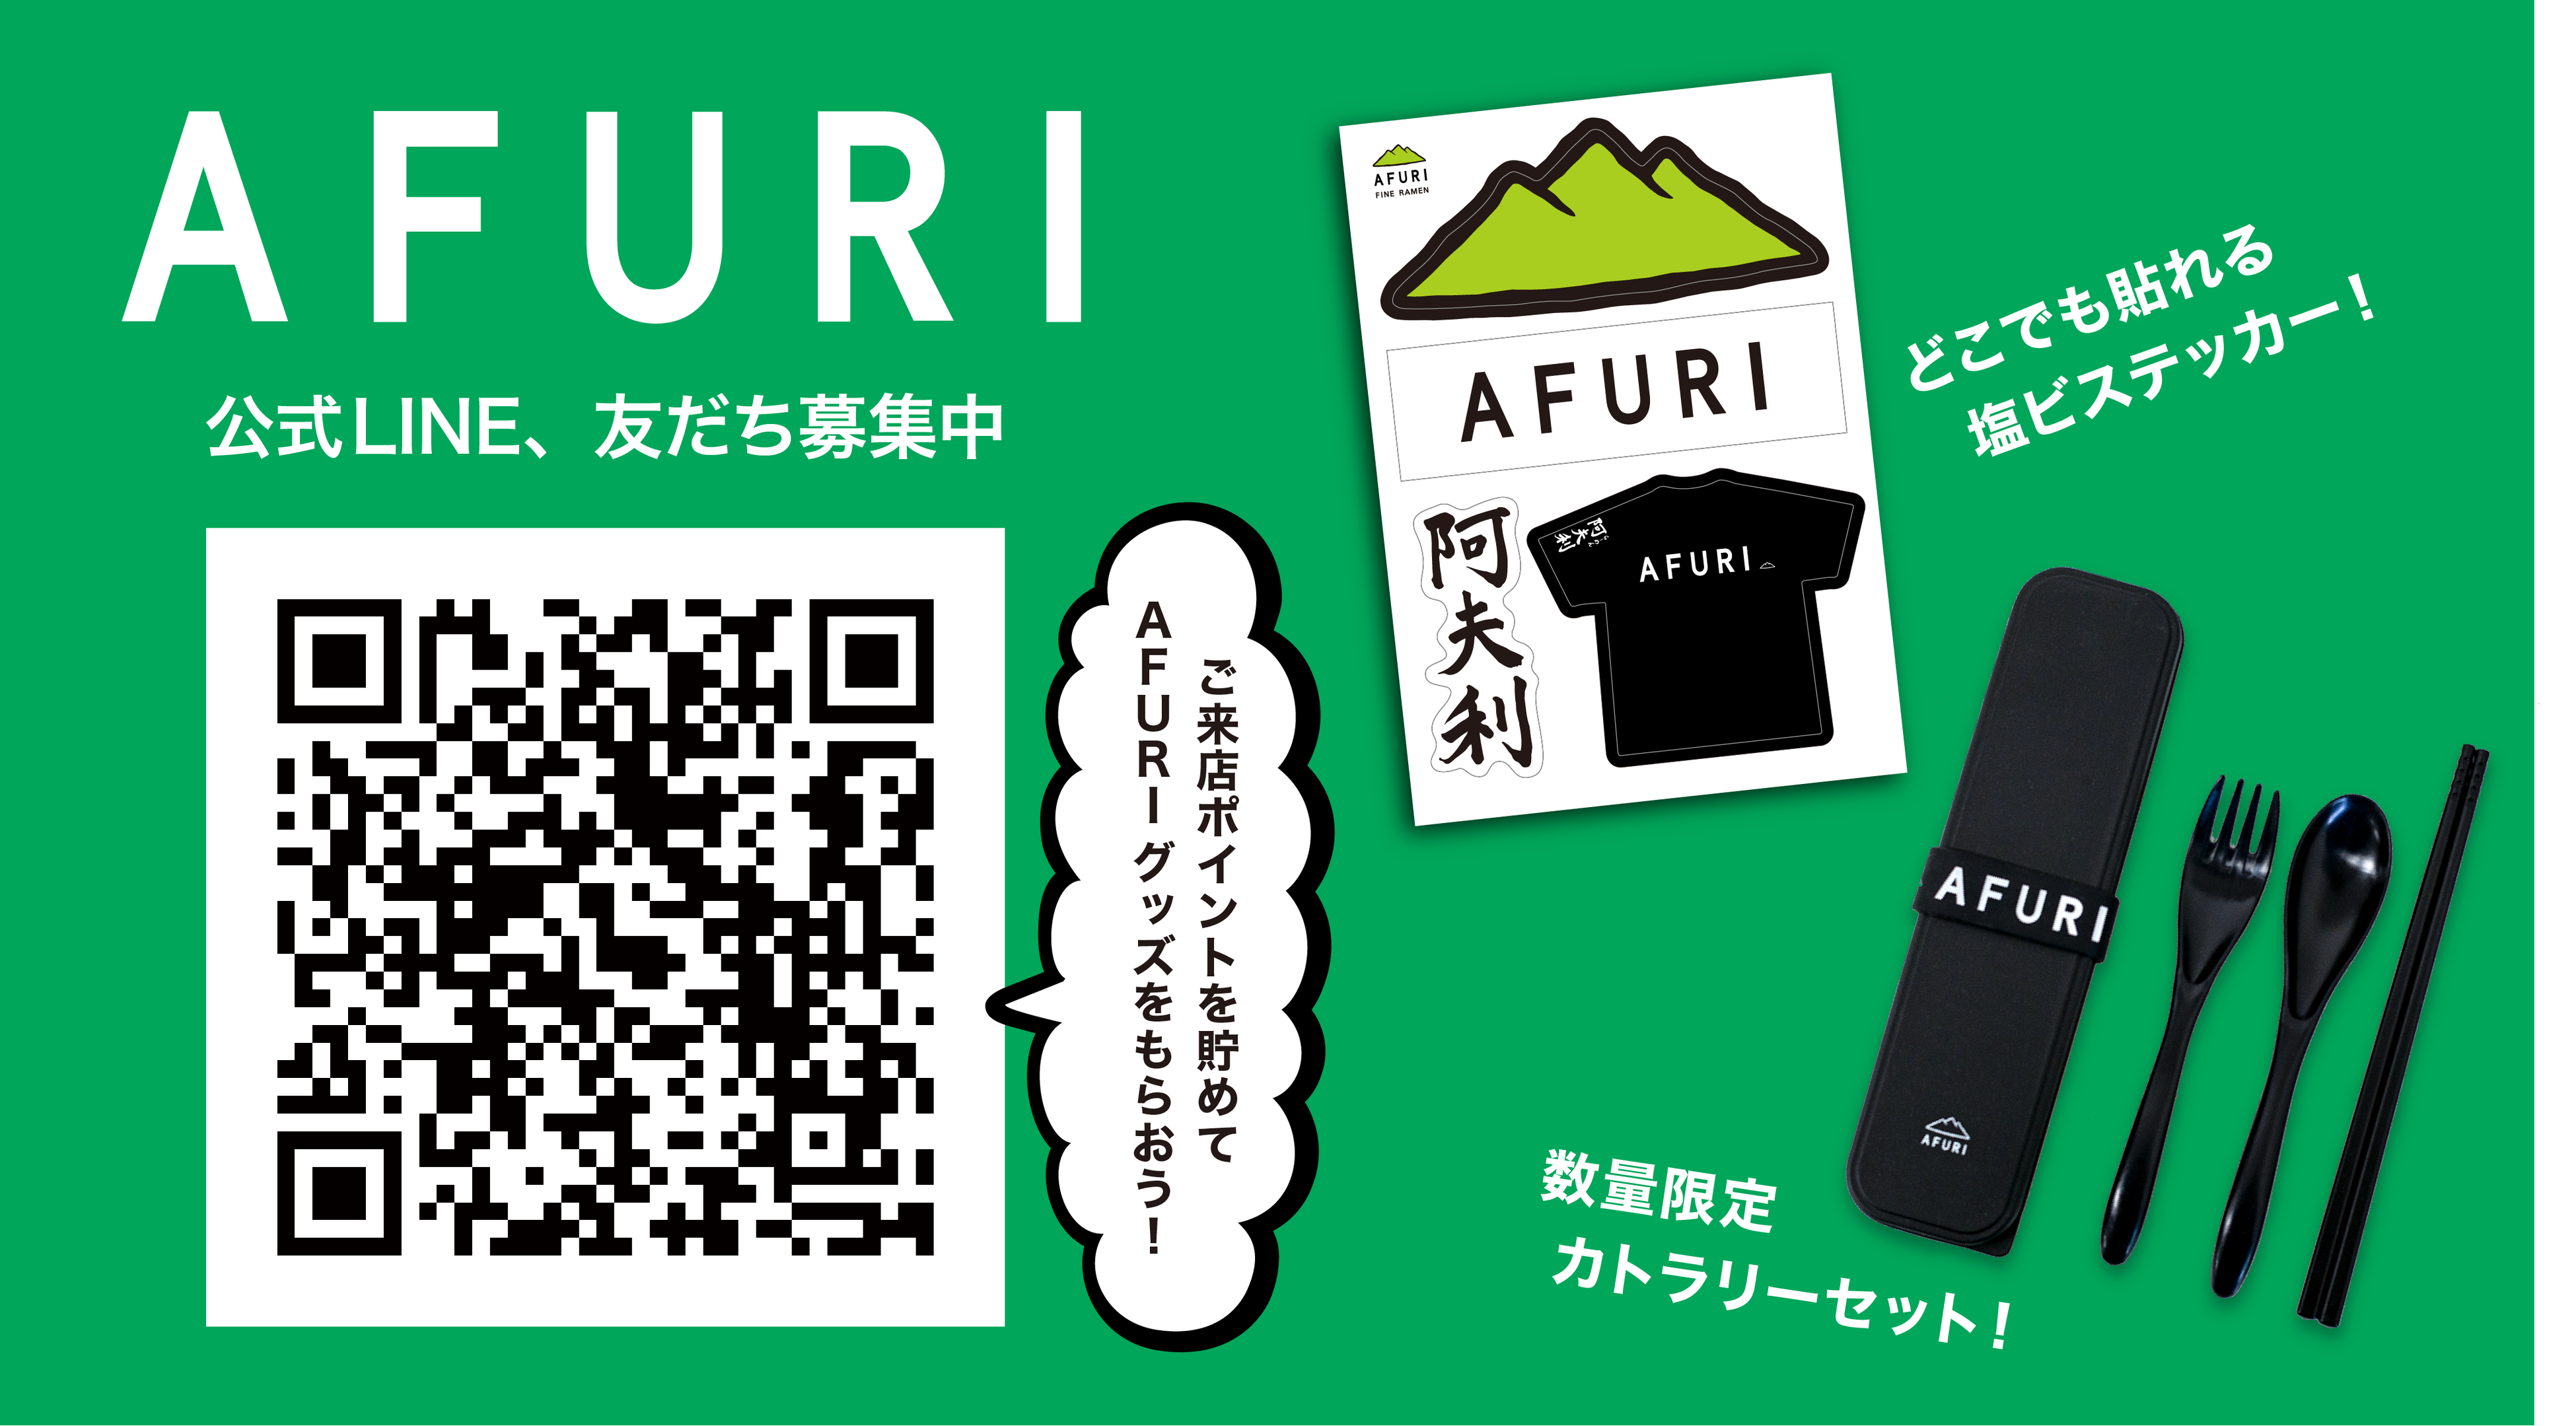 AFURIの公式LINEアカウント